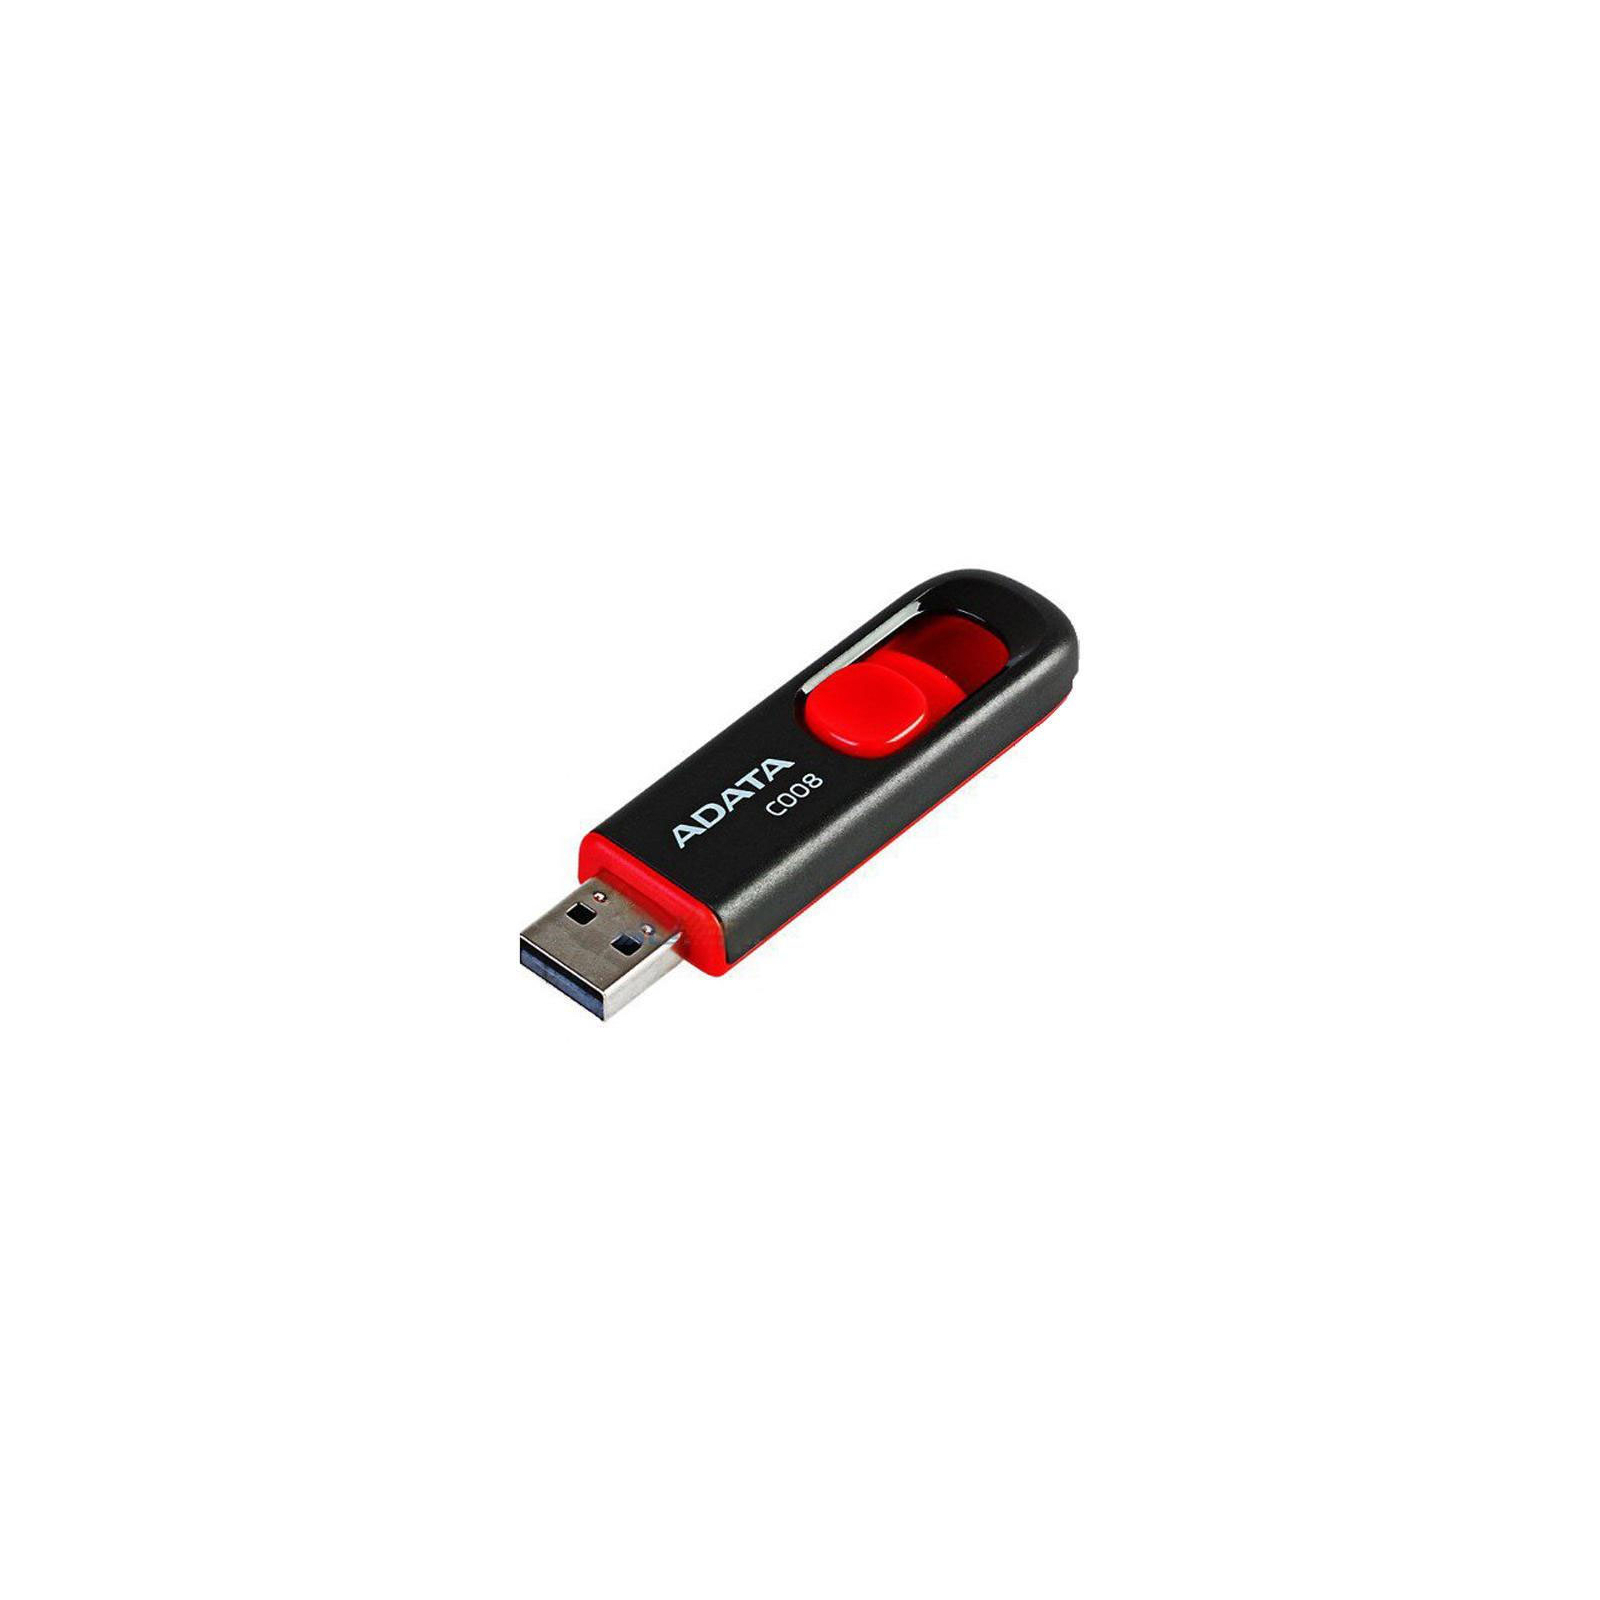 USB флеш накопичувач ADATA 32GB C008 White USB 2.0 (AC008-32G-RWE) зображення 2